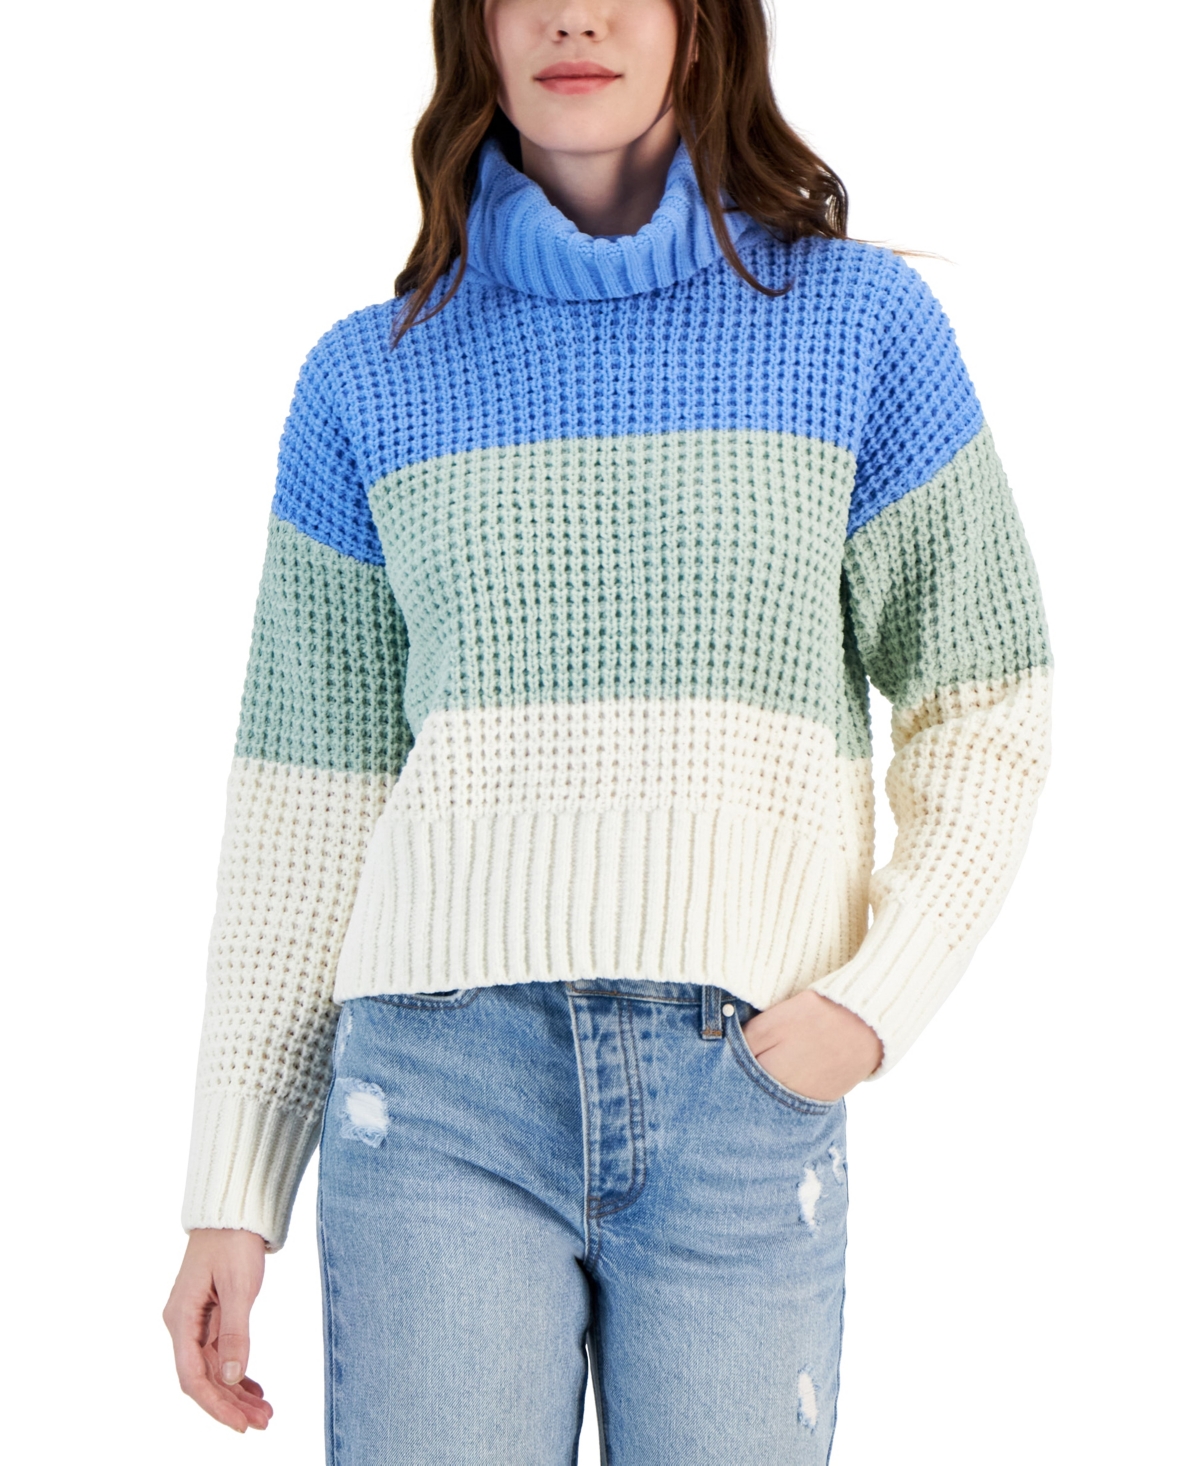 Juniors' Chenille Colorblocked Turtleneck Sweater - Blue Green Combo